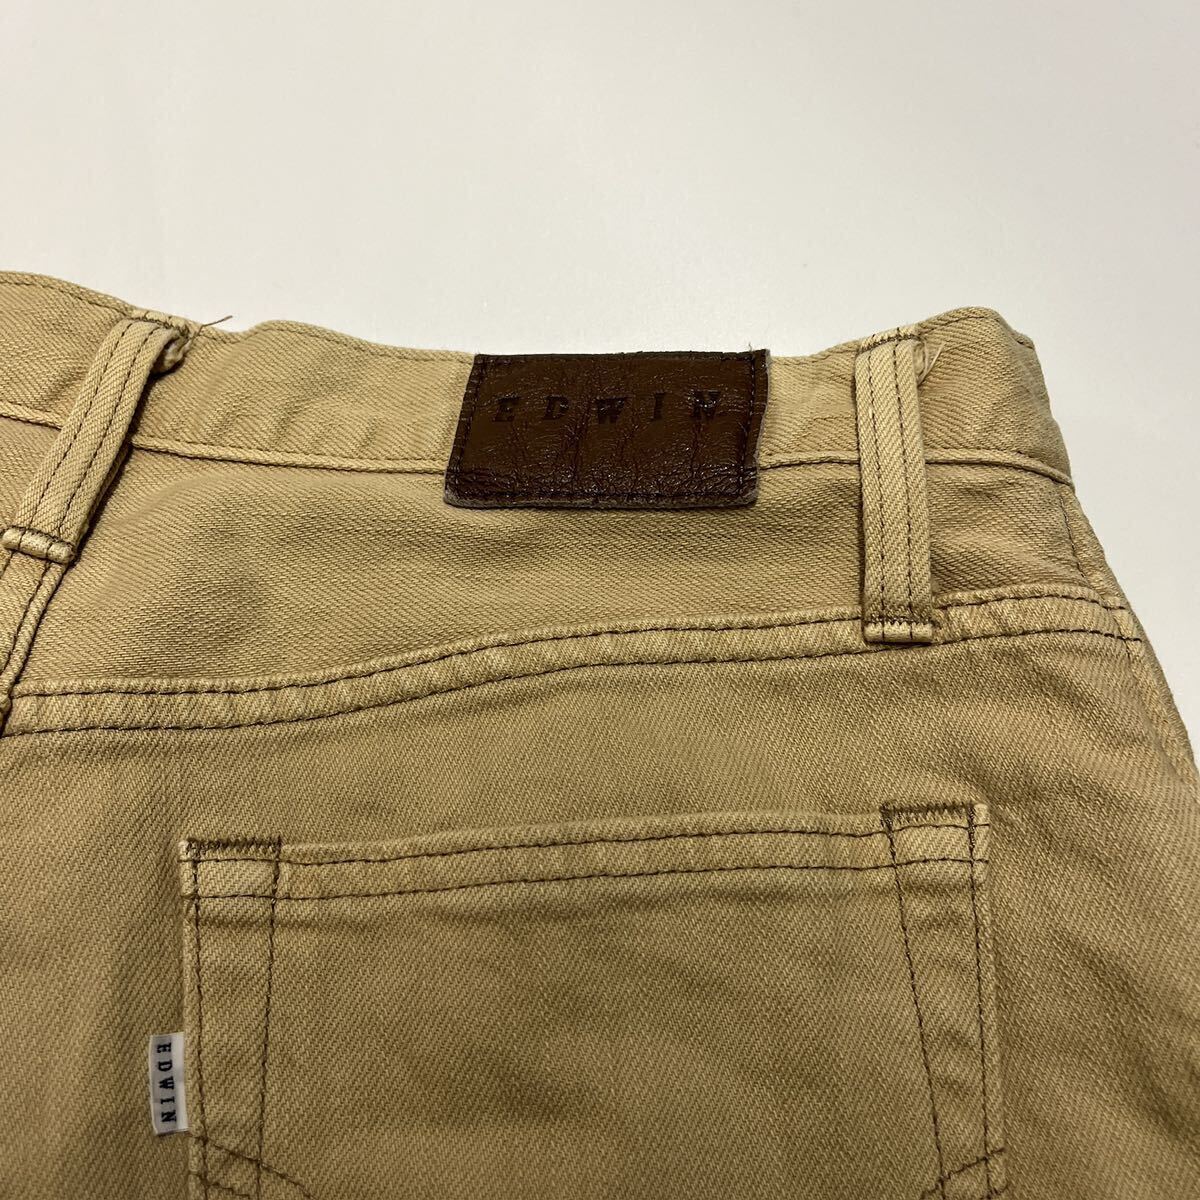 EDWIN Edwin 503ST стрейч джинсы Denim брюки бежевый лен смешивание W30 сделано в Японии 